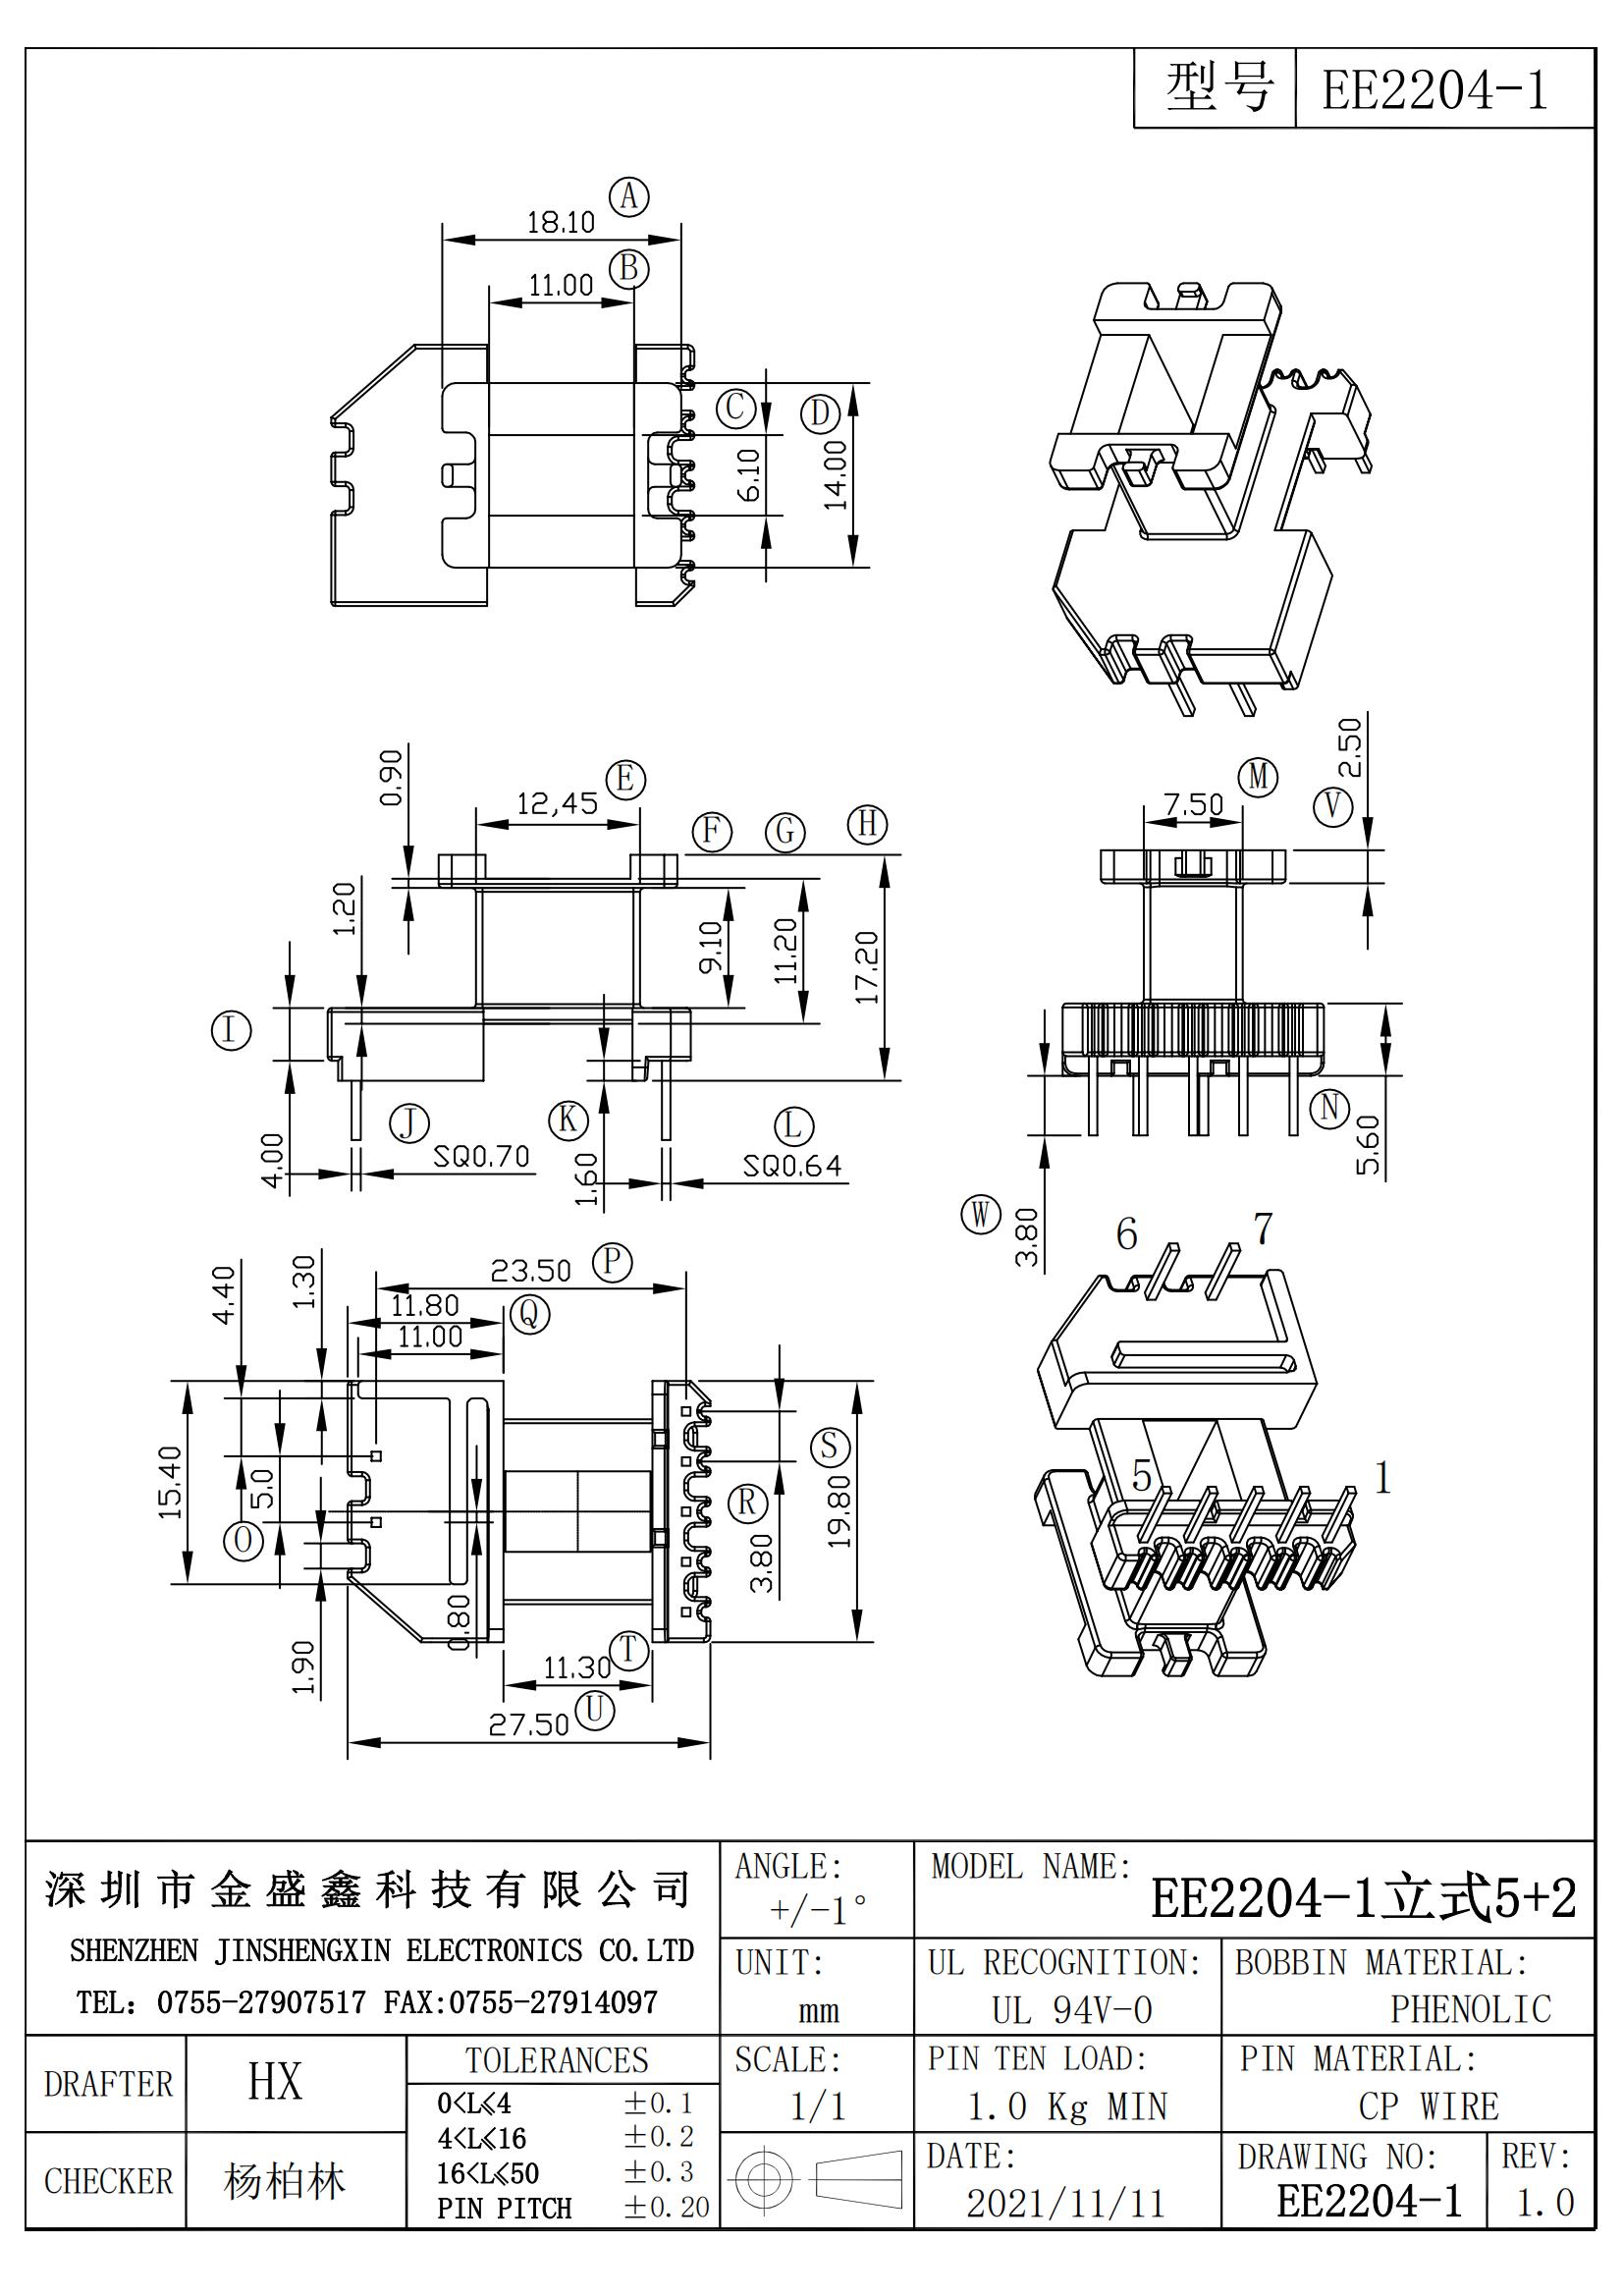 EE-2204-1 211125 3D  230906 G尺寸修改 Model (1)_00.jpg